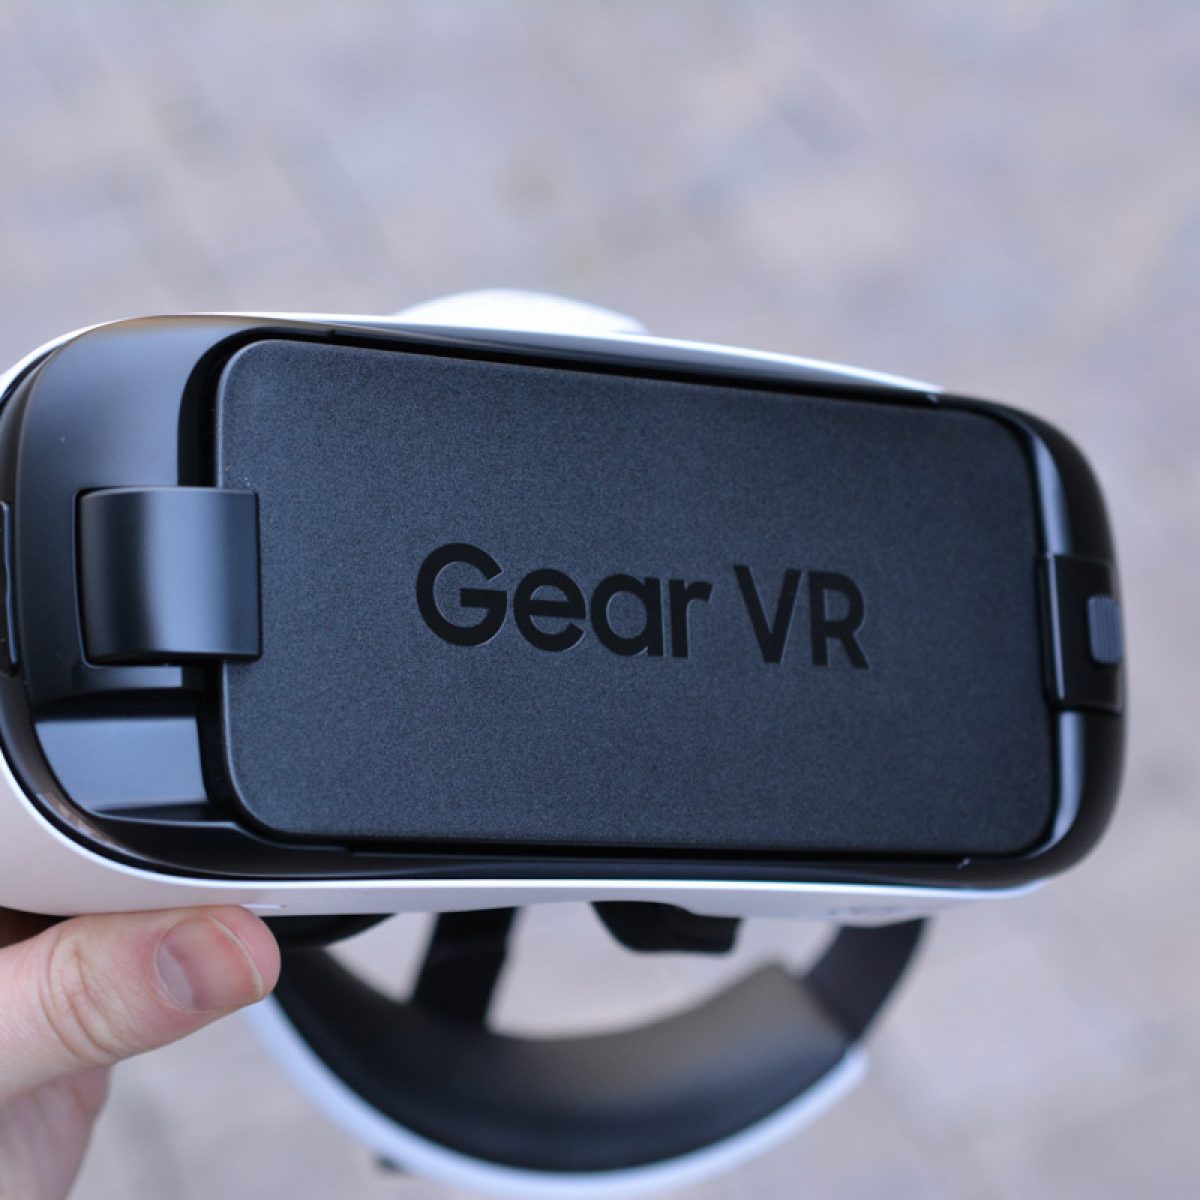 Edge vr. Samsung Gear VR. Samsung Galaxy s9 VR. Gear VR with Samsung s7 Edge. Samsung Gear VR QR.